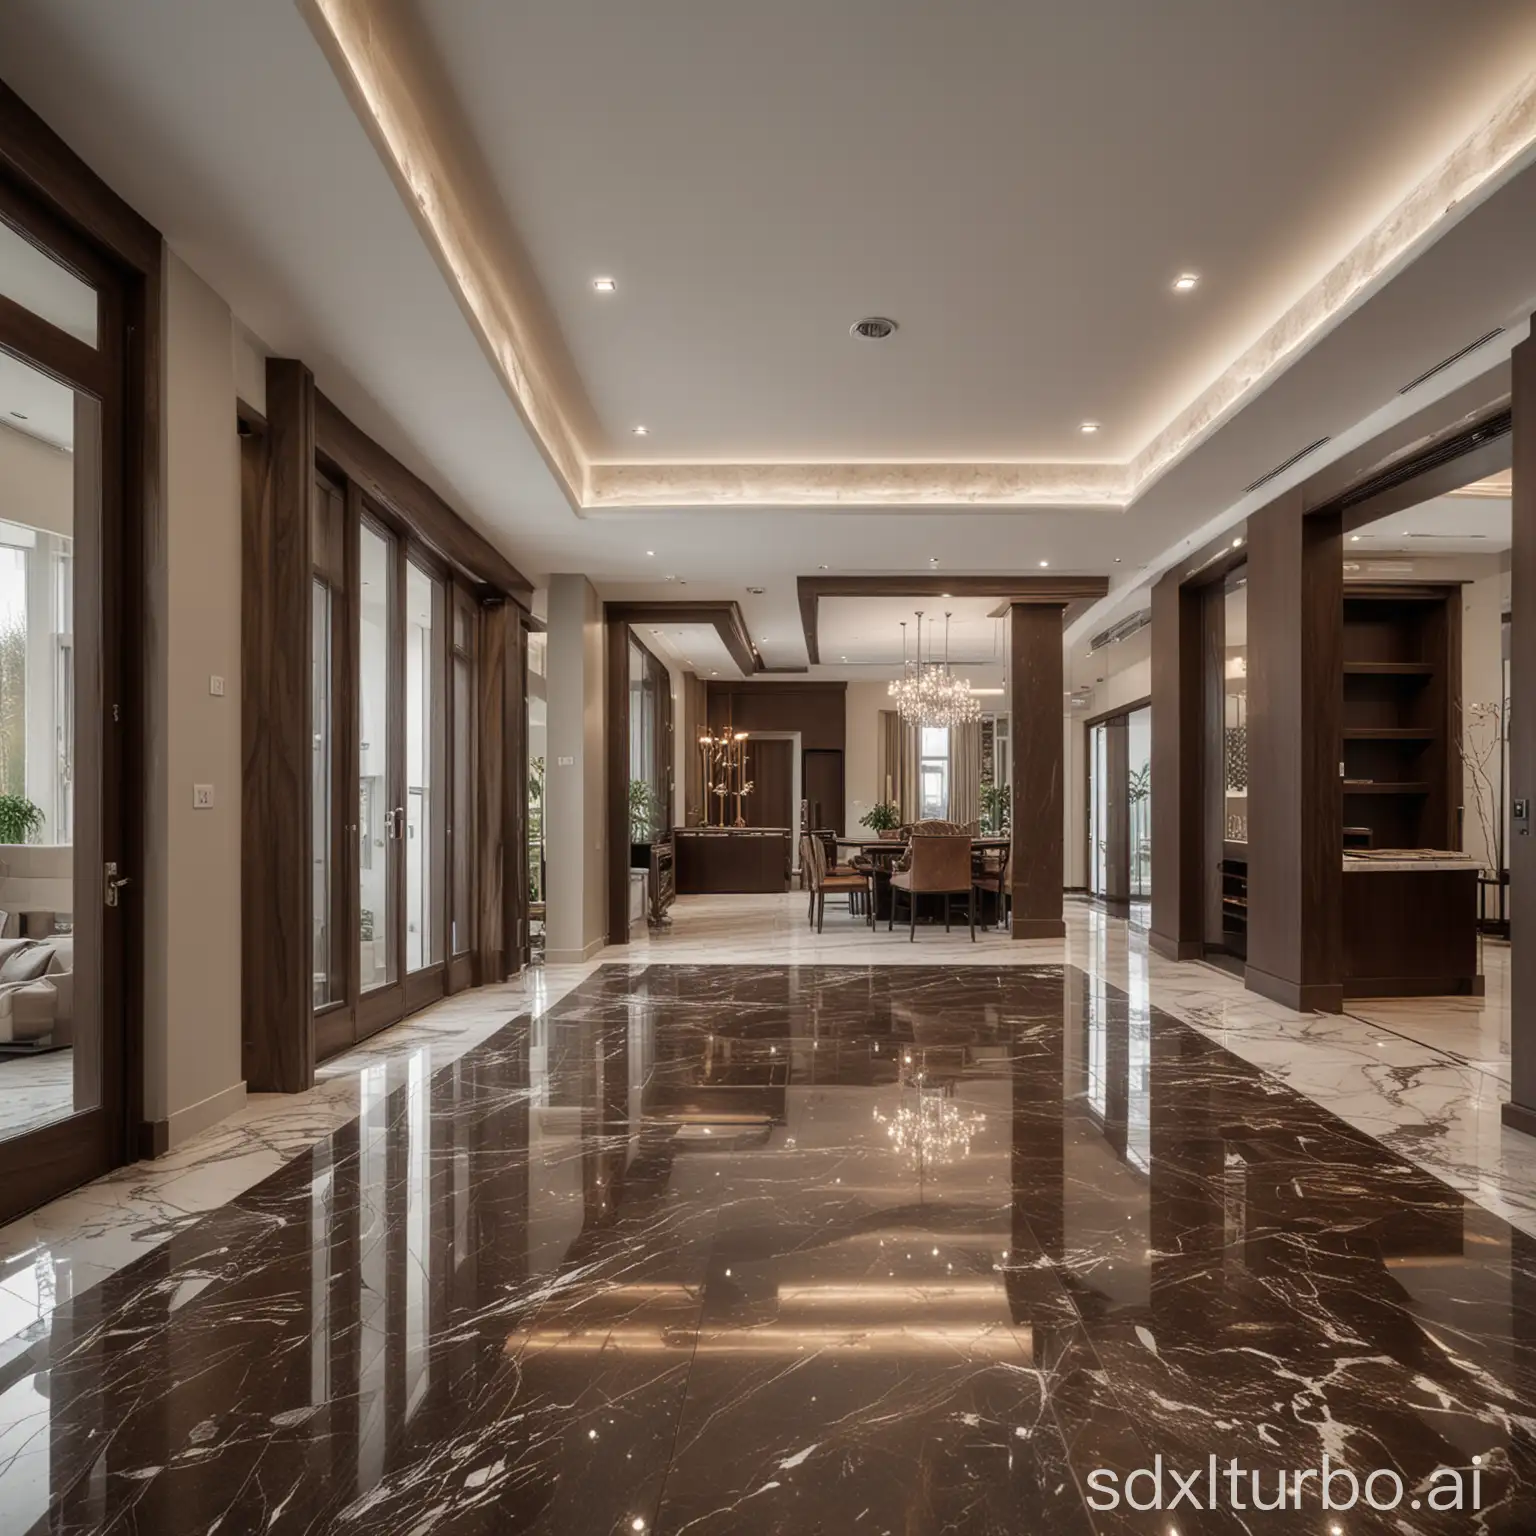 Luxurious-SingleFamily-Home-Interior-with-Elegant-Dark-Wood-Furniture